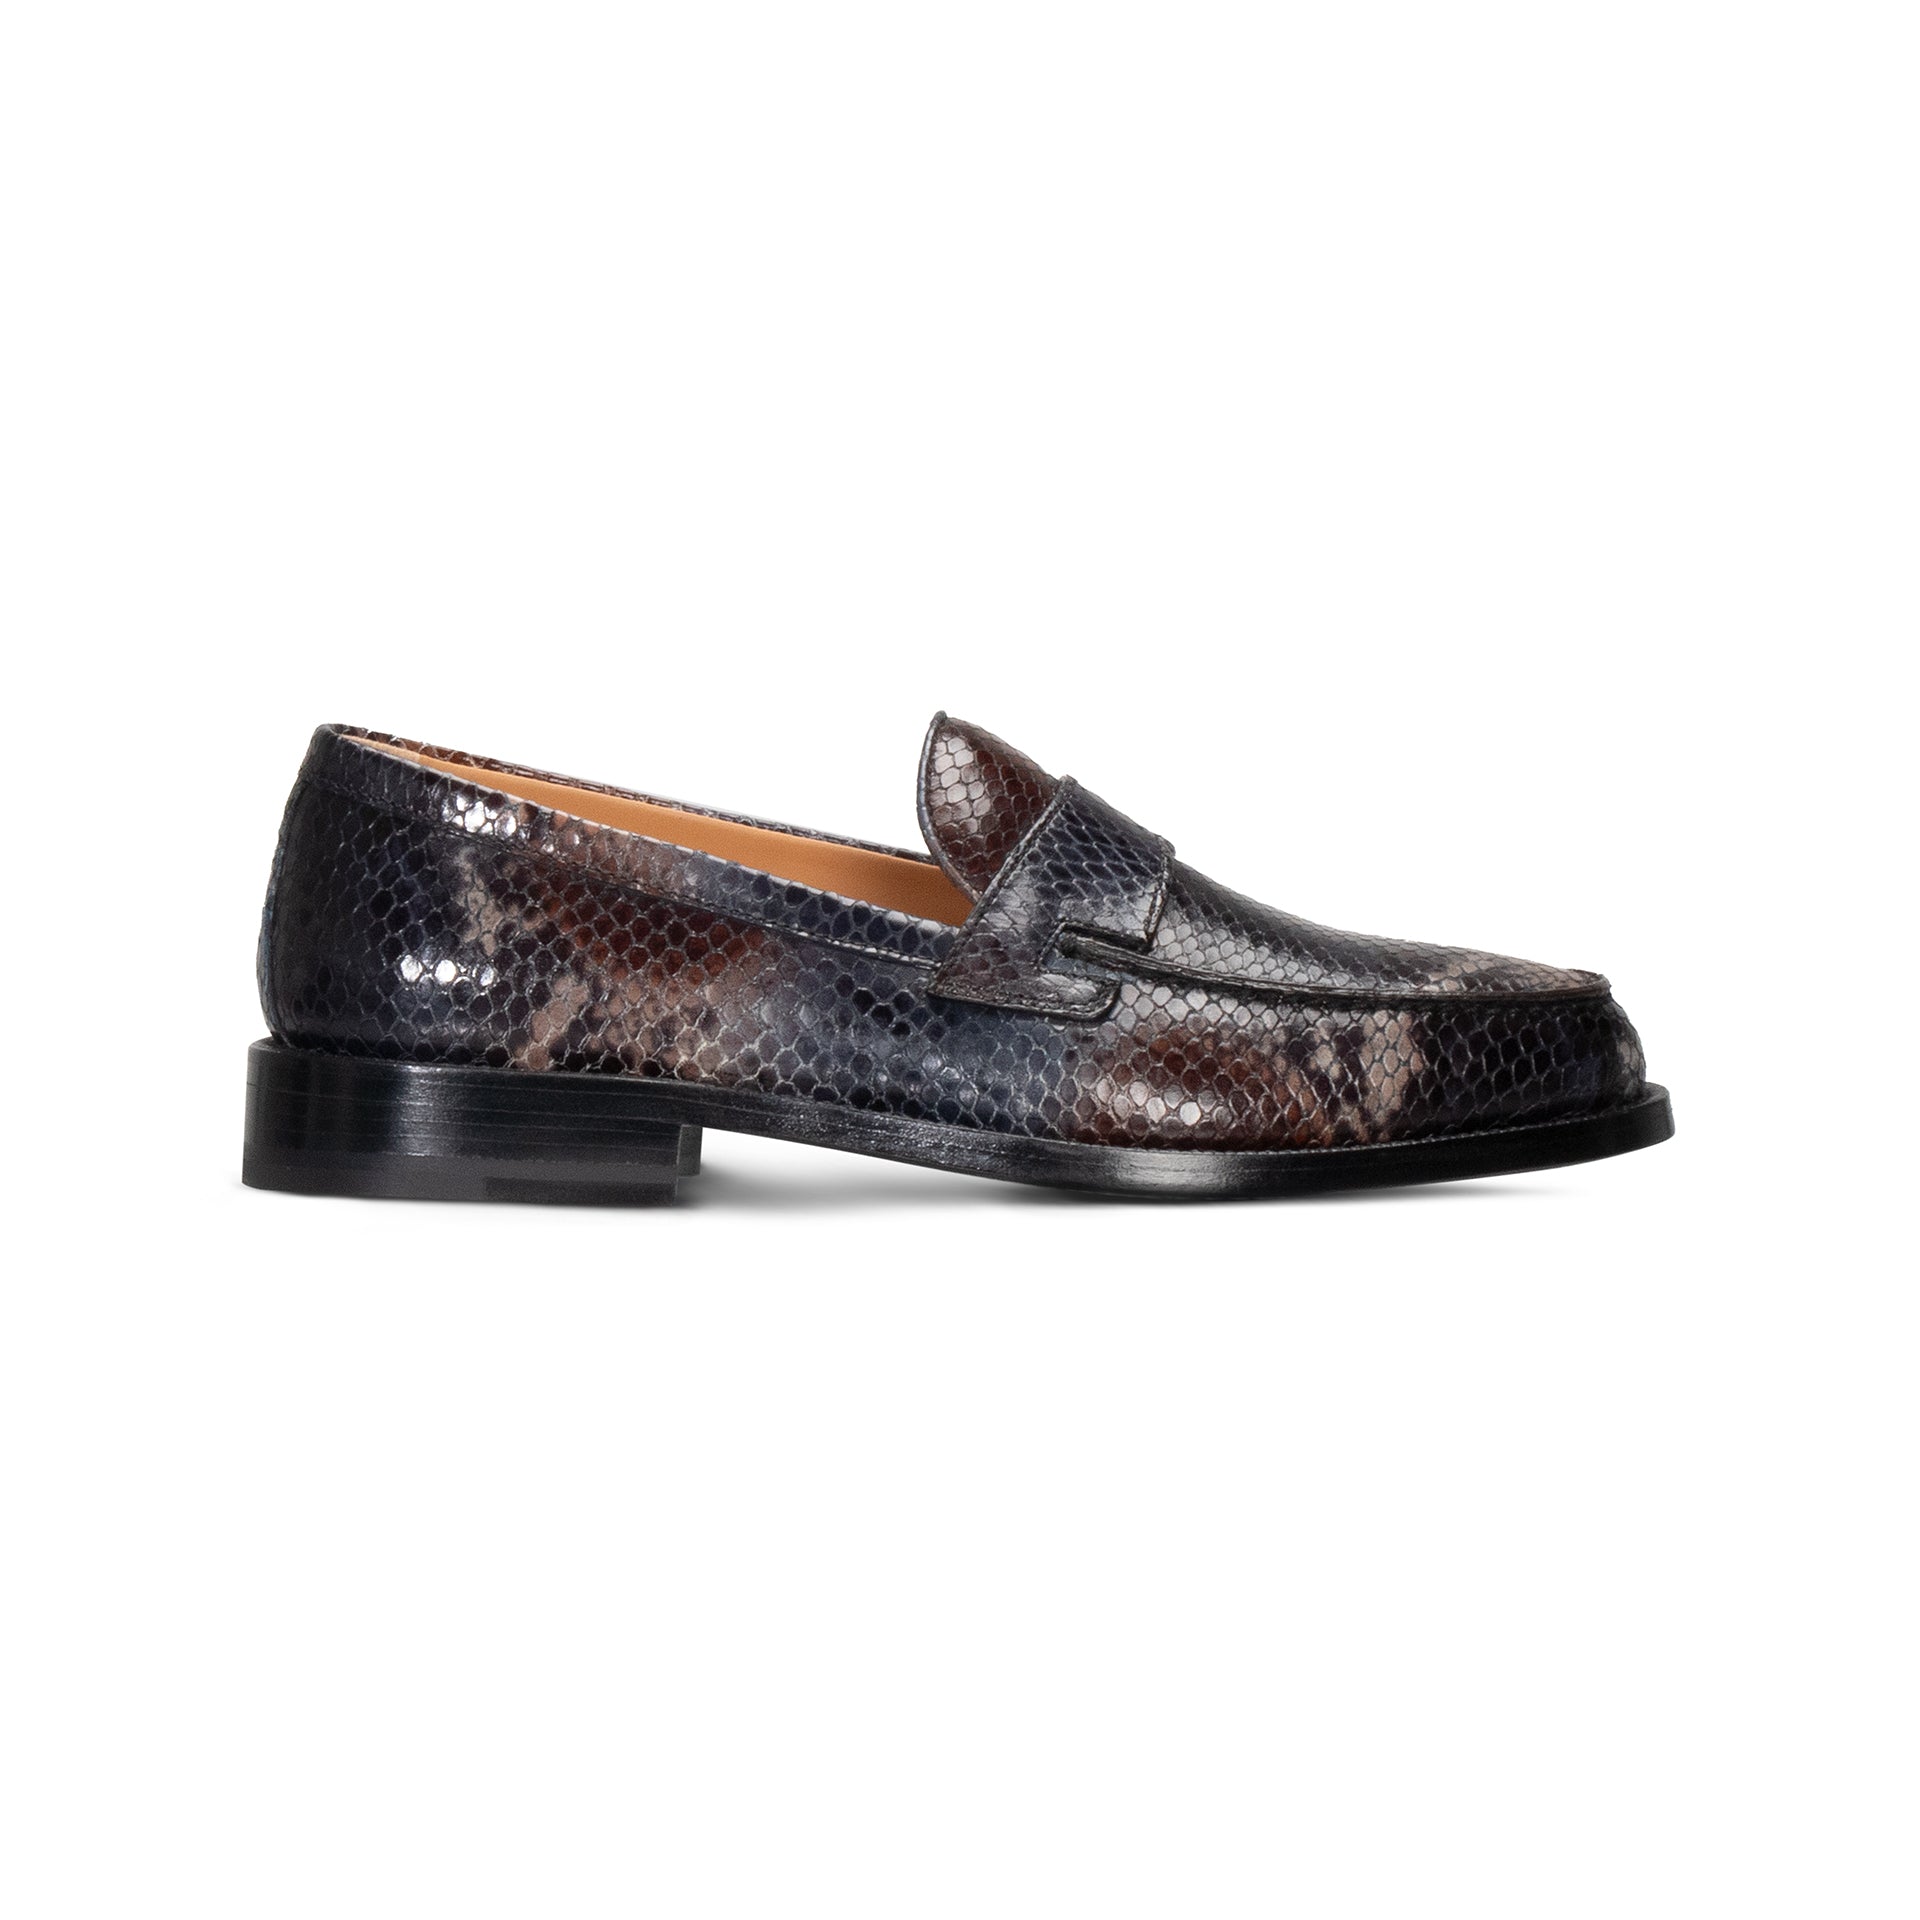 FOR HER - Bicolor leather loafer – Moreschi